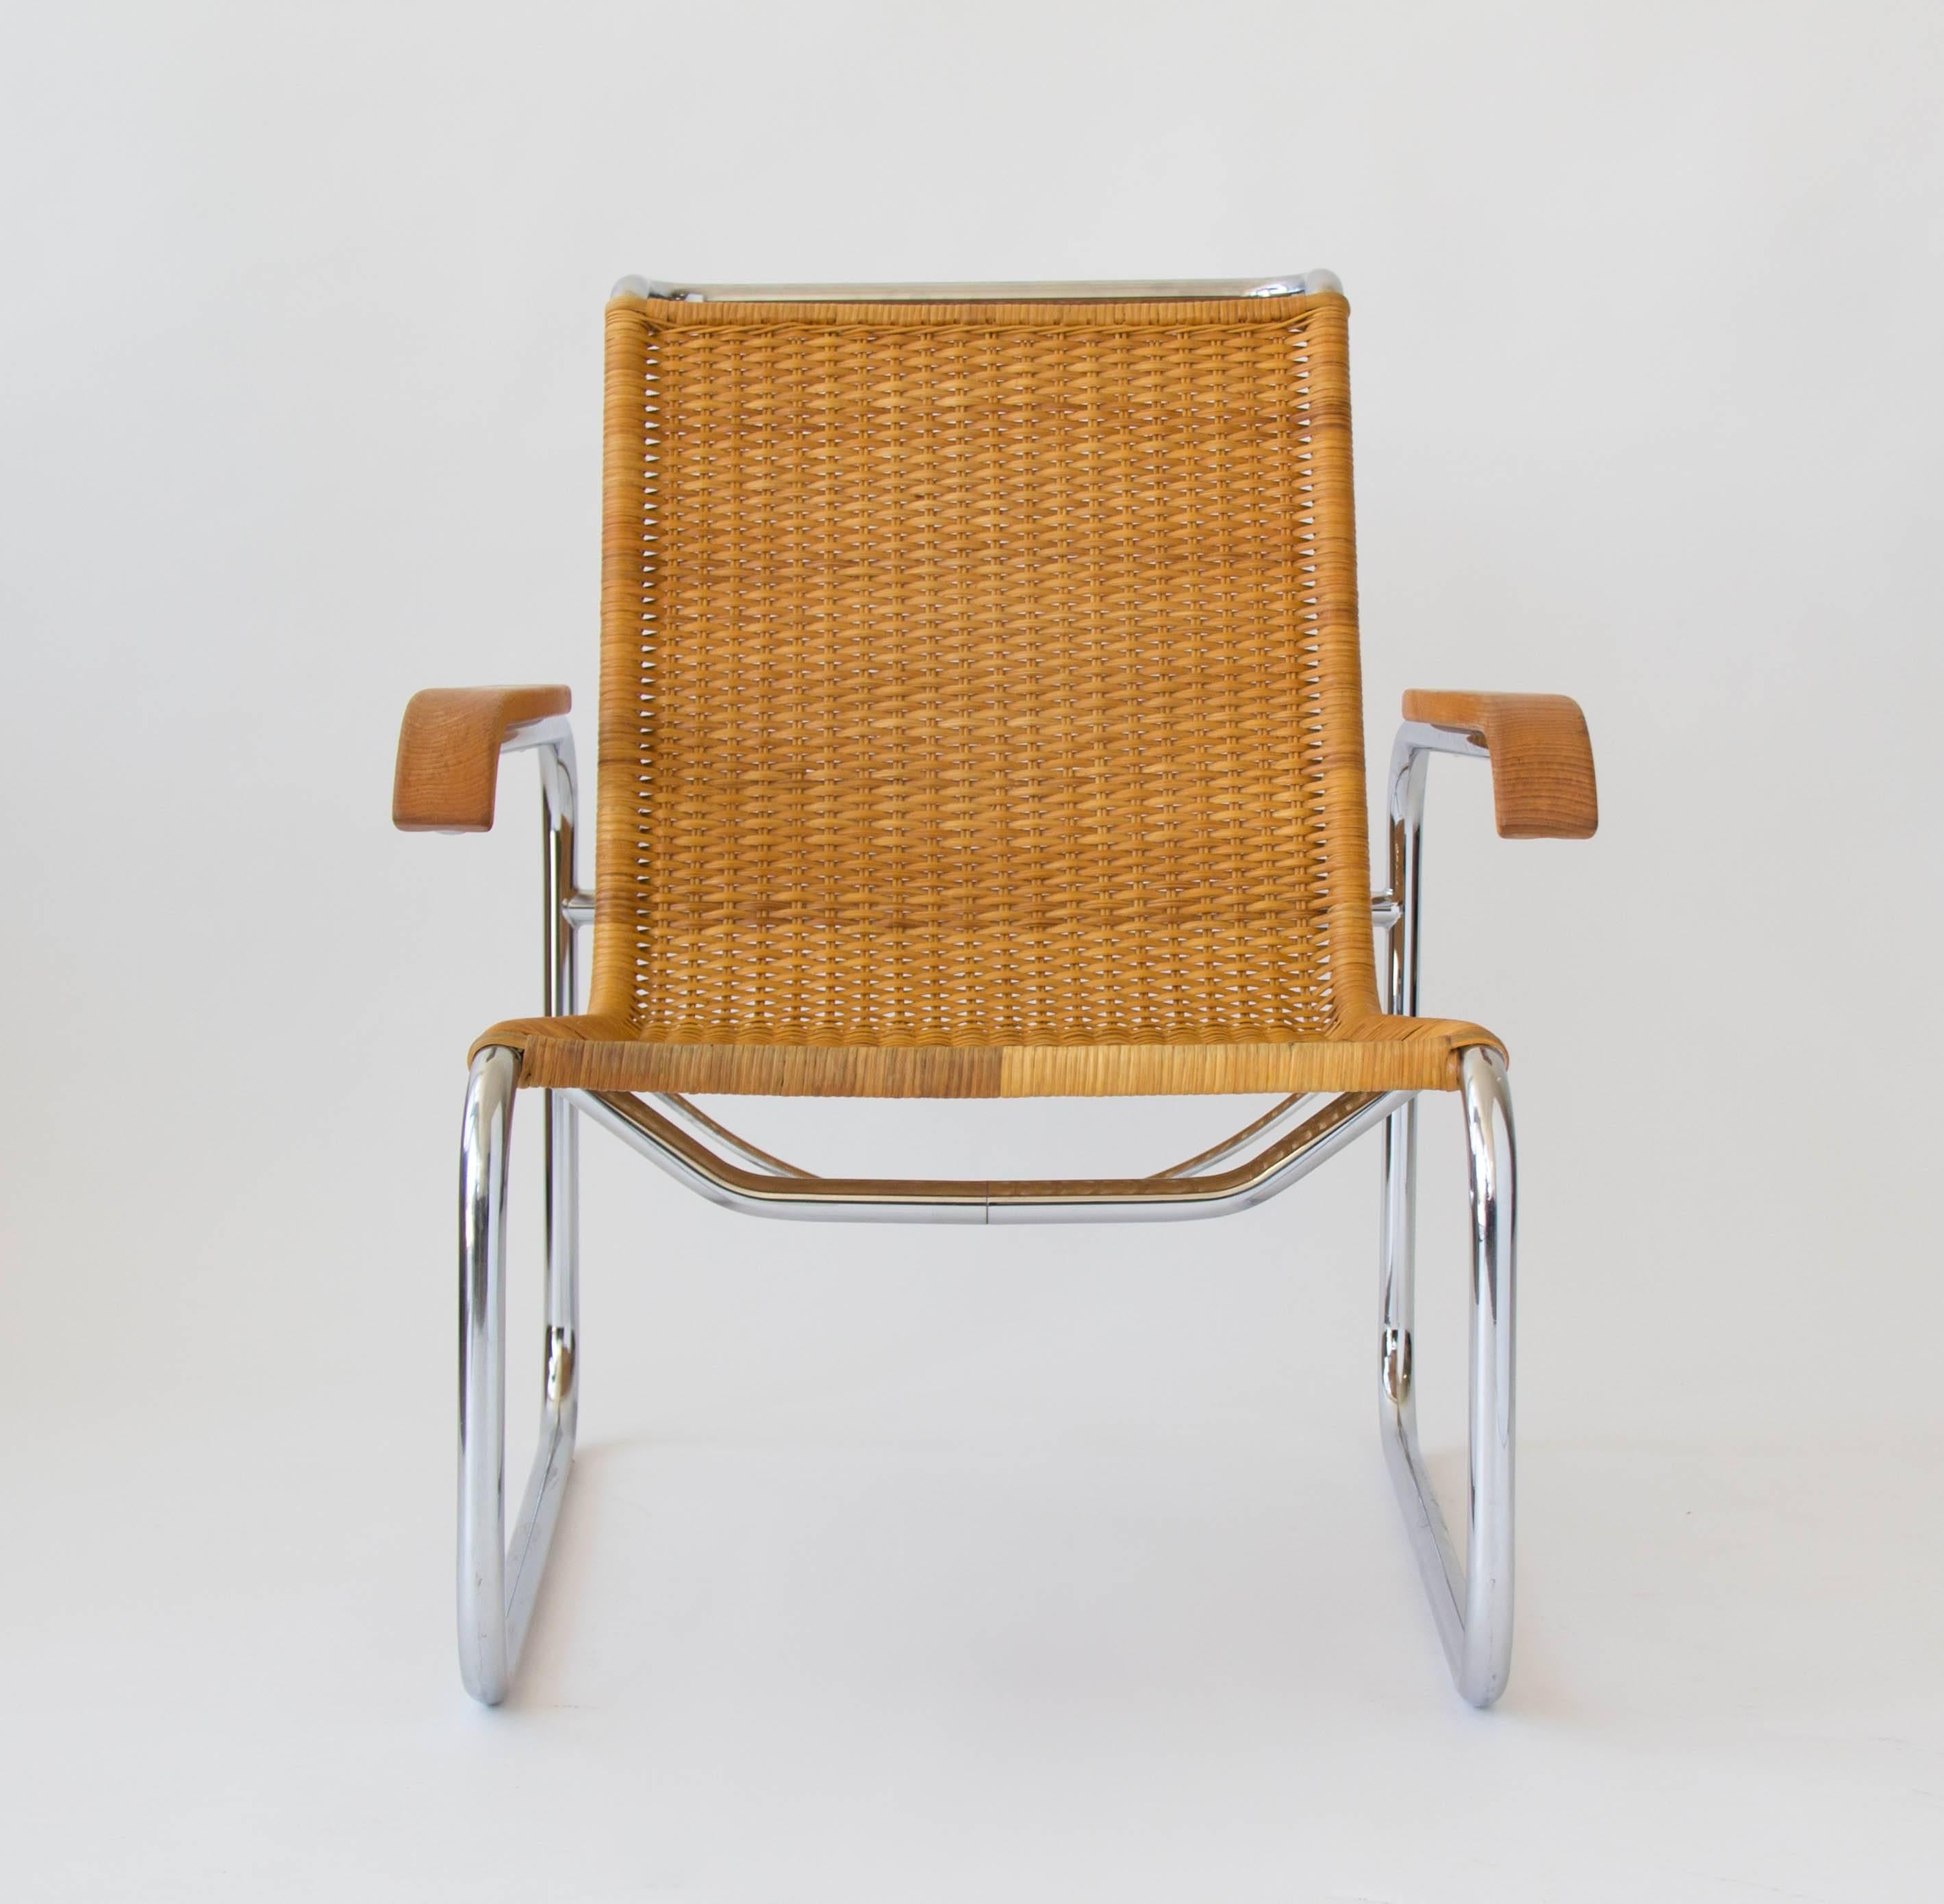 German Marcel Breuer for Thonet B35 Rattan Lounge Chair